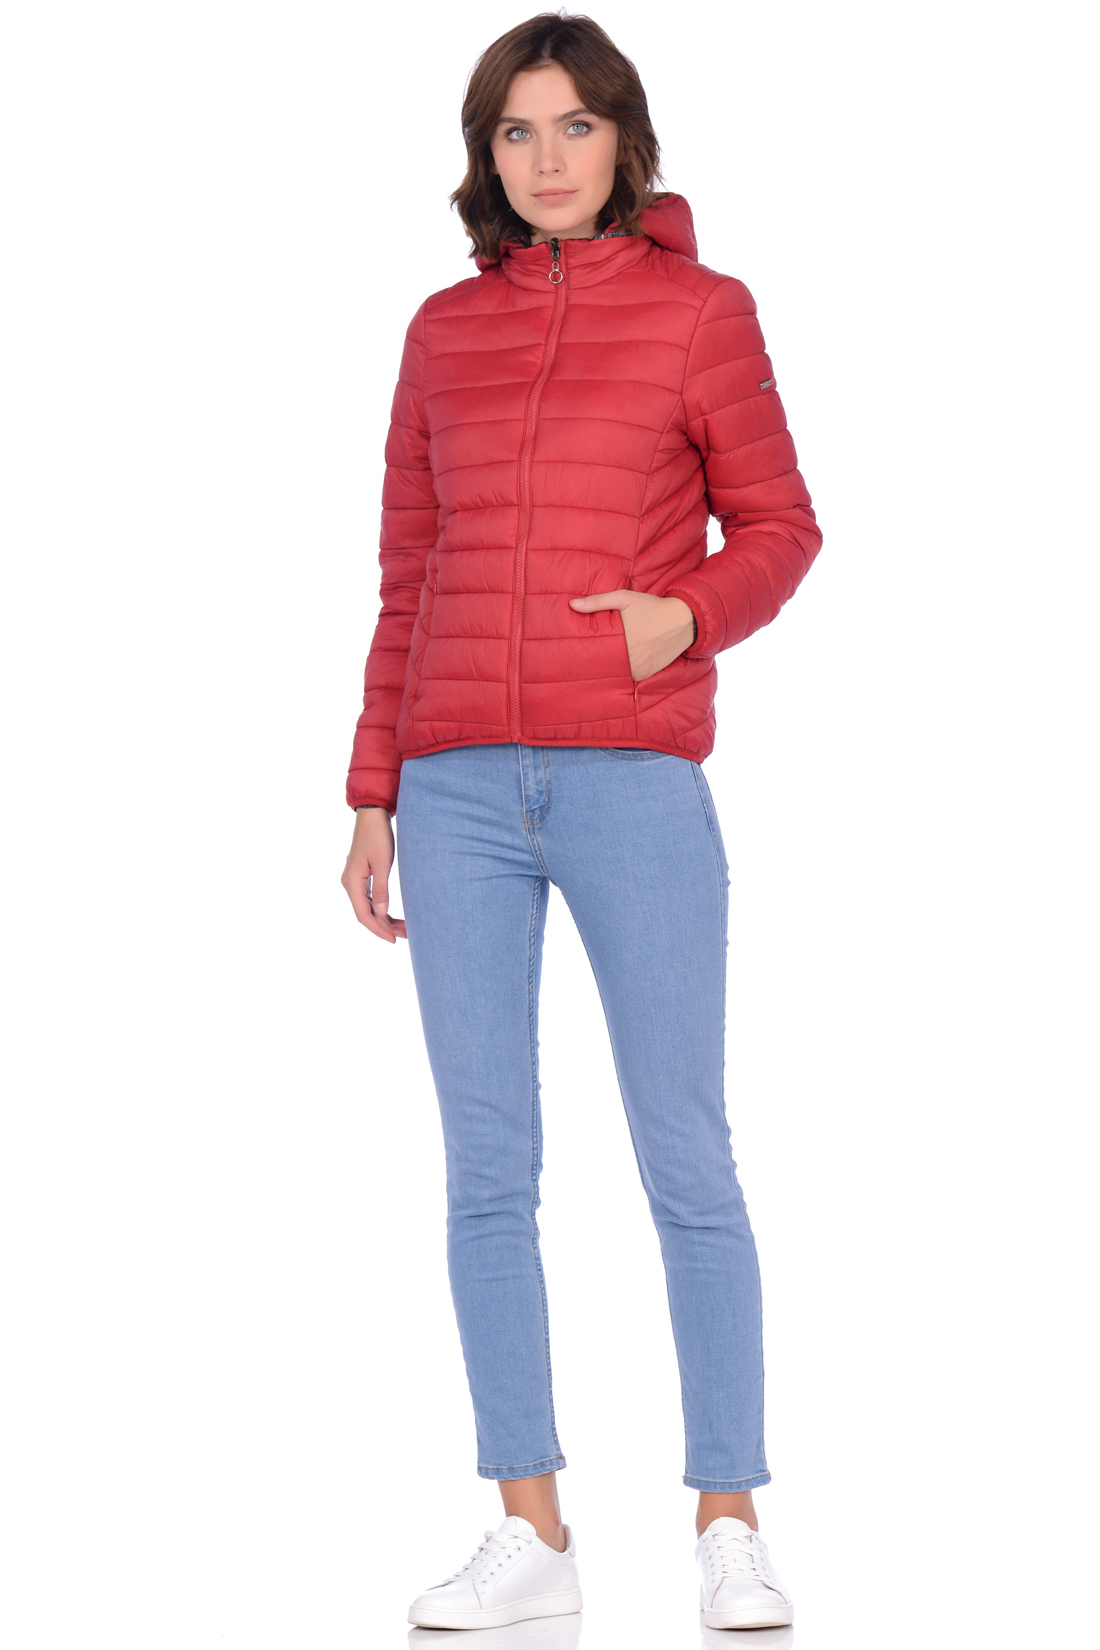 Двухстороняя куртка (арт. baon B039550), размер M, цвет красный Двухстороняя куртка (арт. baon B039550) - фото 5